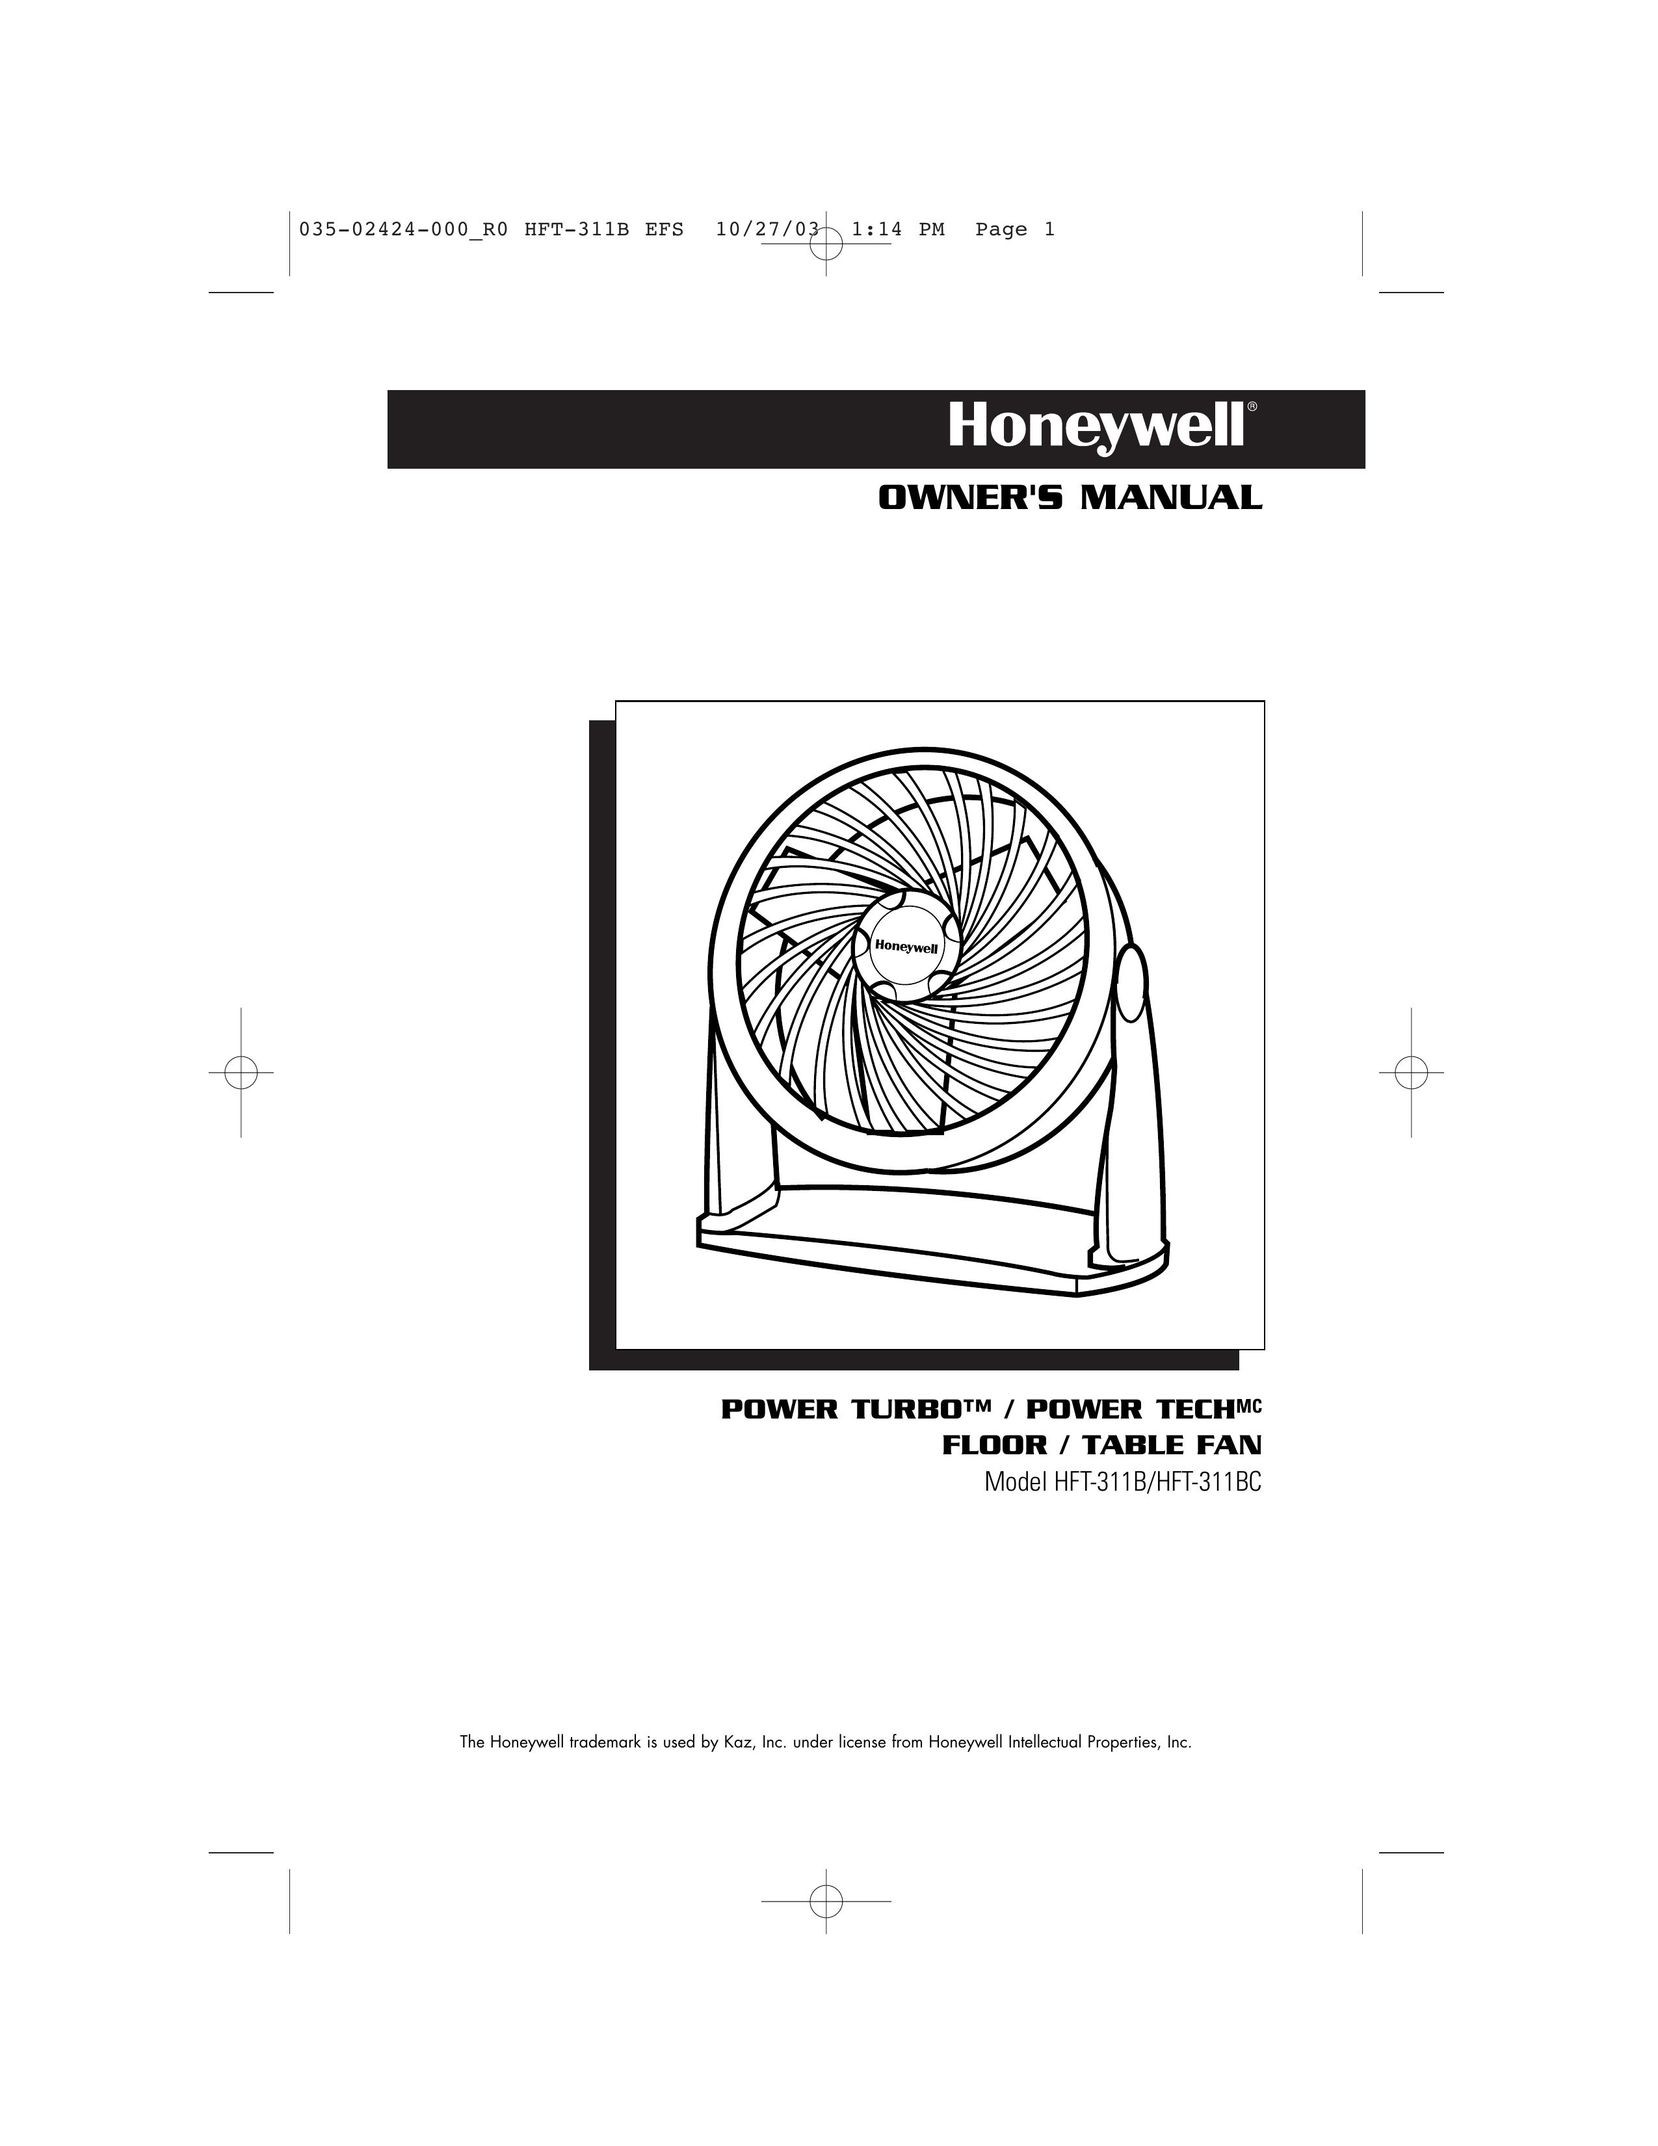 Honeywell HFT-311BC Fan User Manual